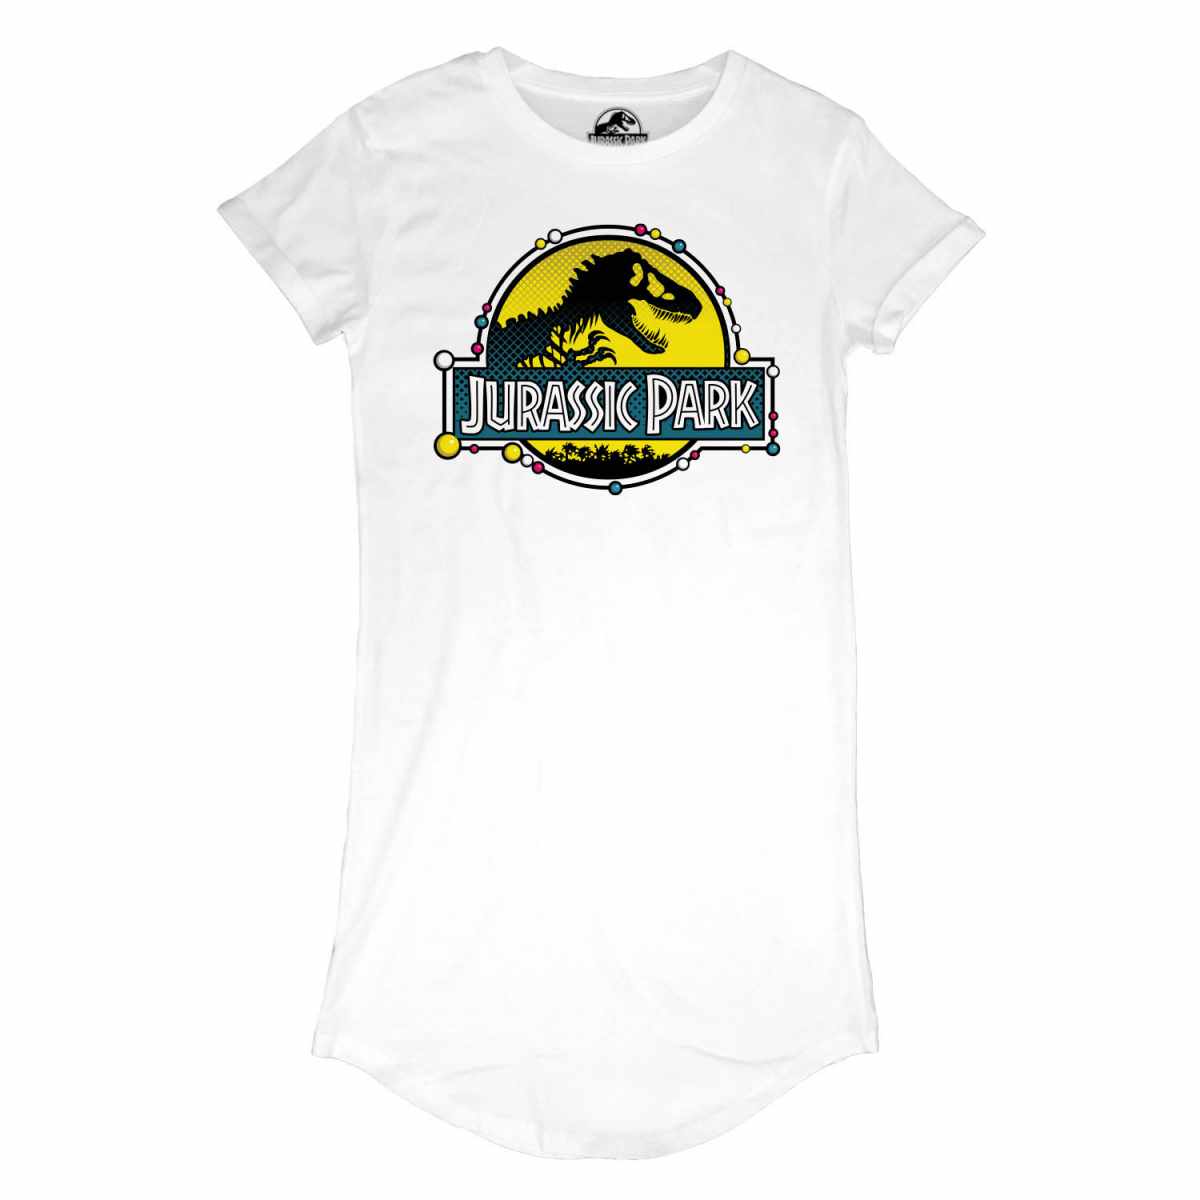 Jurassic Park DNALogo T-Shirt Dress